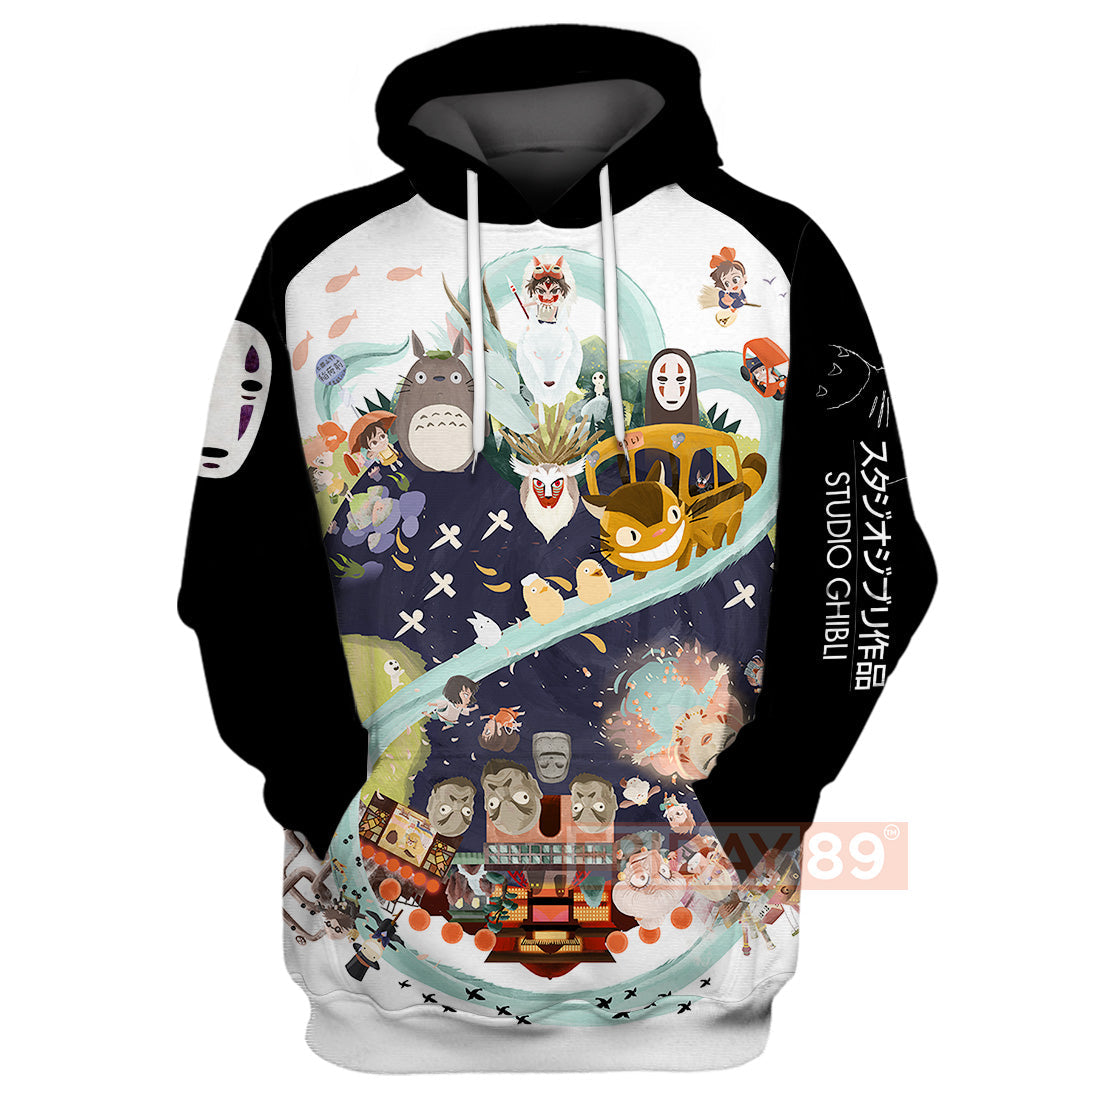 Unifinz GB Hoodie GB All Character Adorable Chibi Art Totoro Spirited Away 3D T-shirt Amazing High Quality GB Shirt Sweater Tank 2022